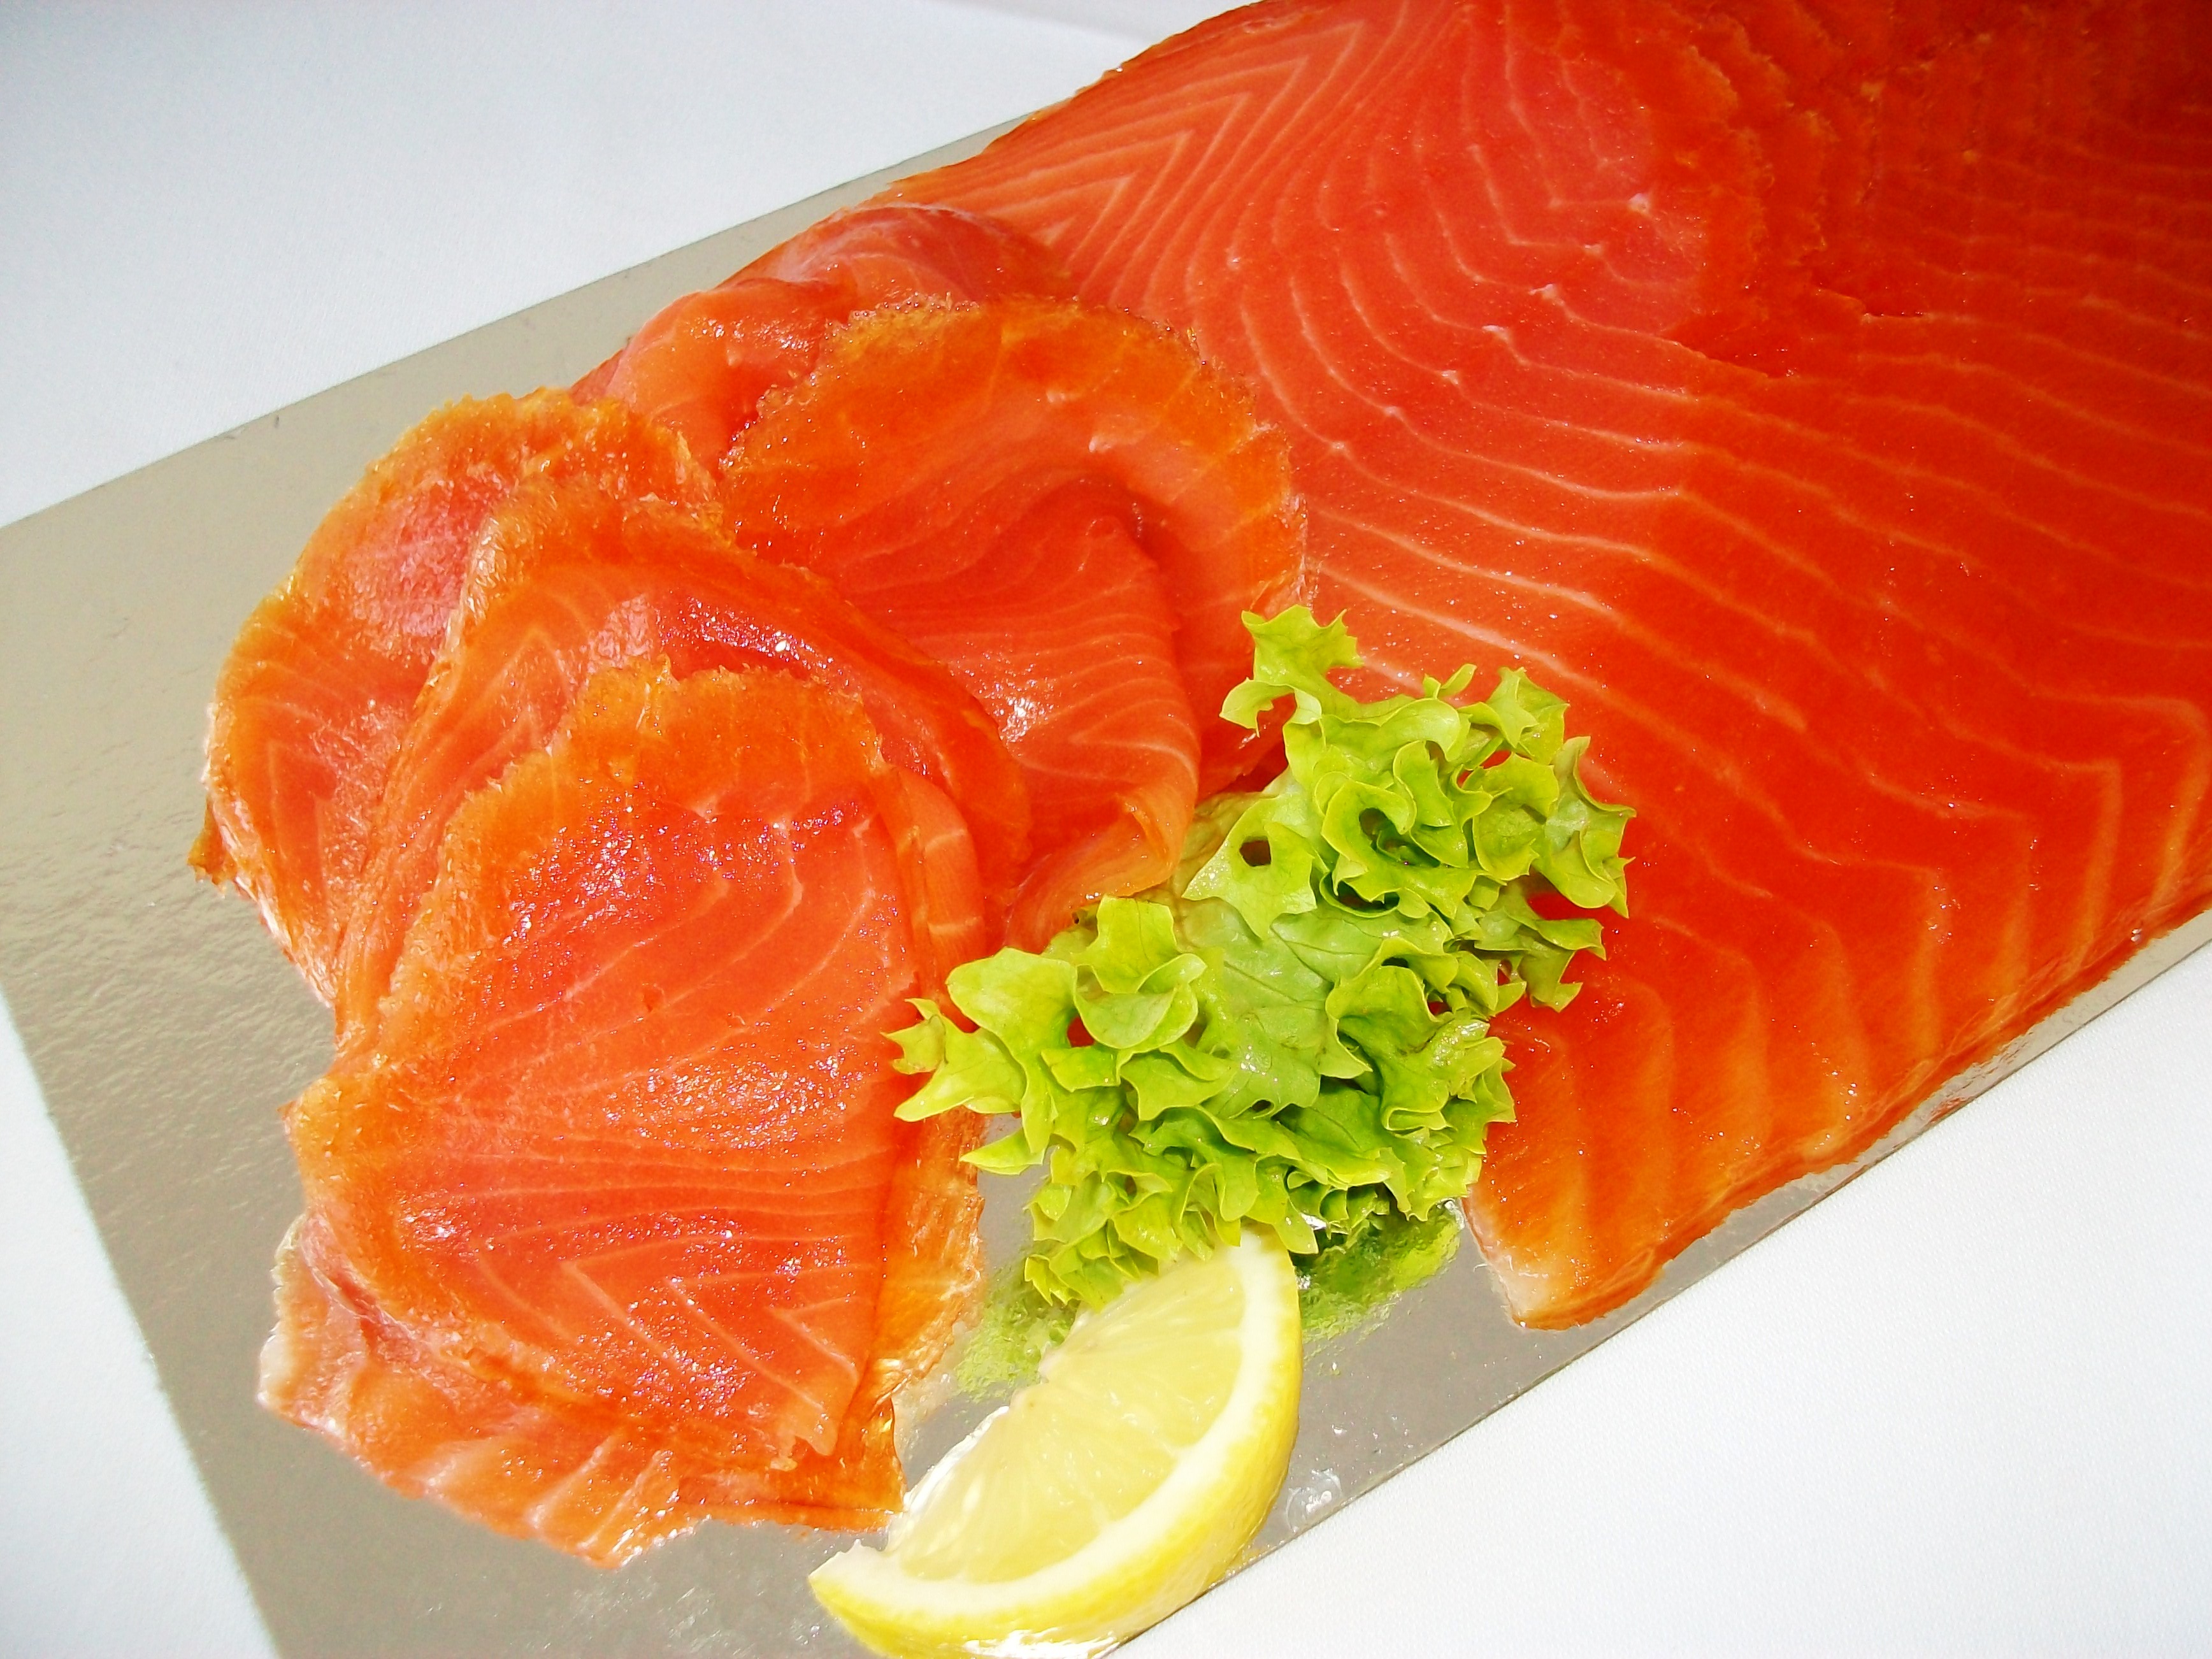 Nordic Salmon small Räucherlachs geschnitten,ca. 200 g, inkl. 1 Gl. Sahnemeerrettich 45 g